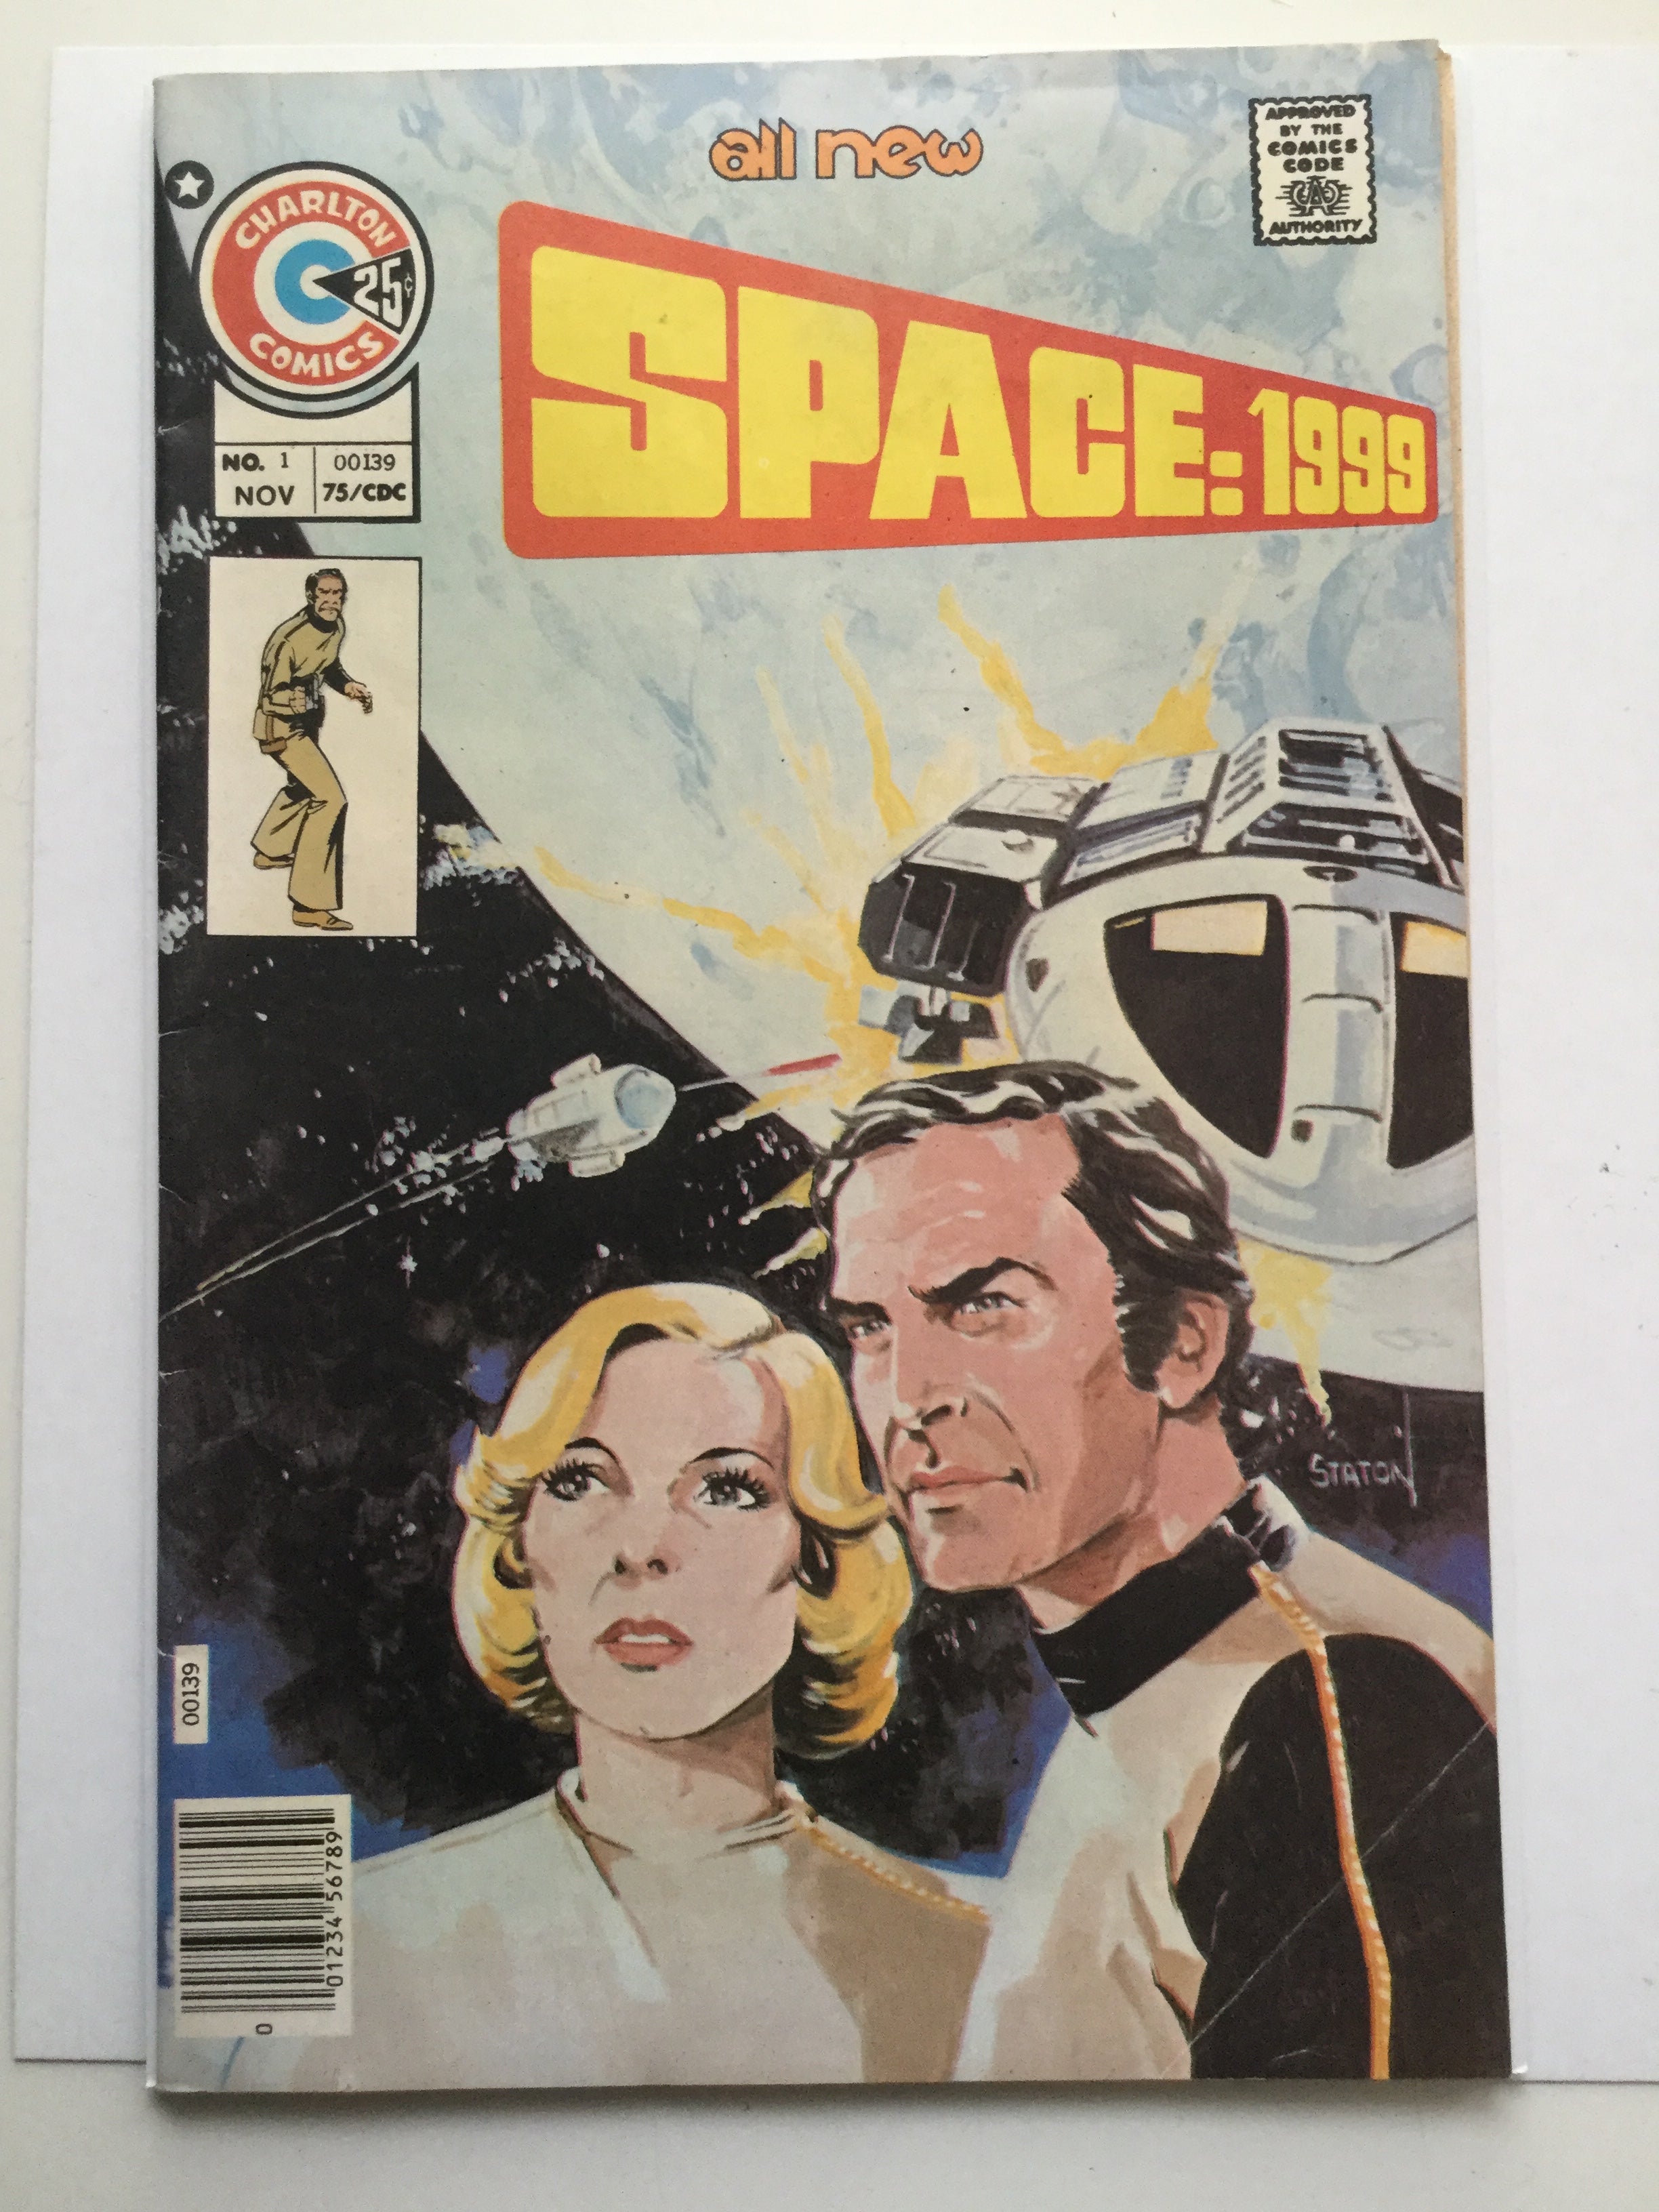 Space 1999 Rare #1 comic book